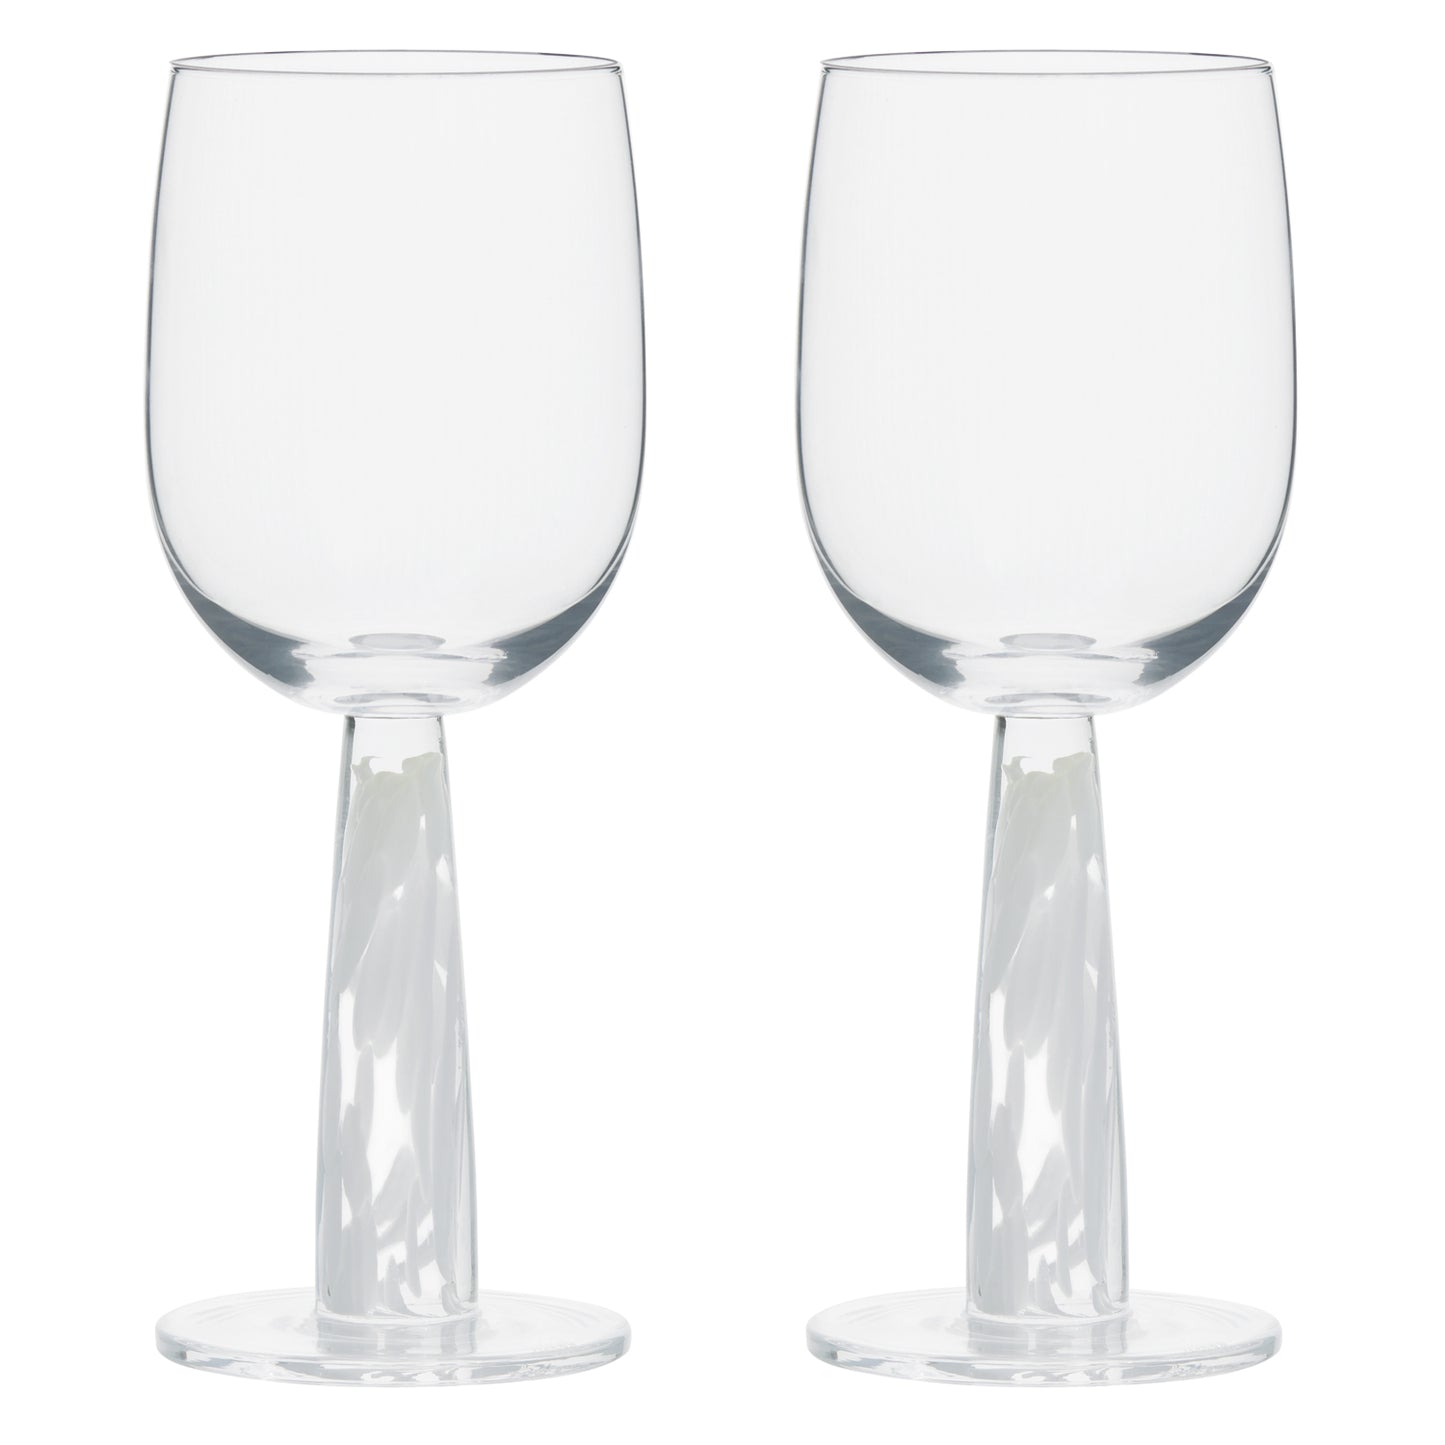 Bjorn Wine Glasses